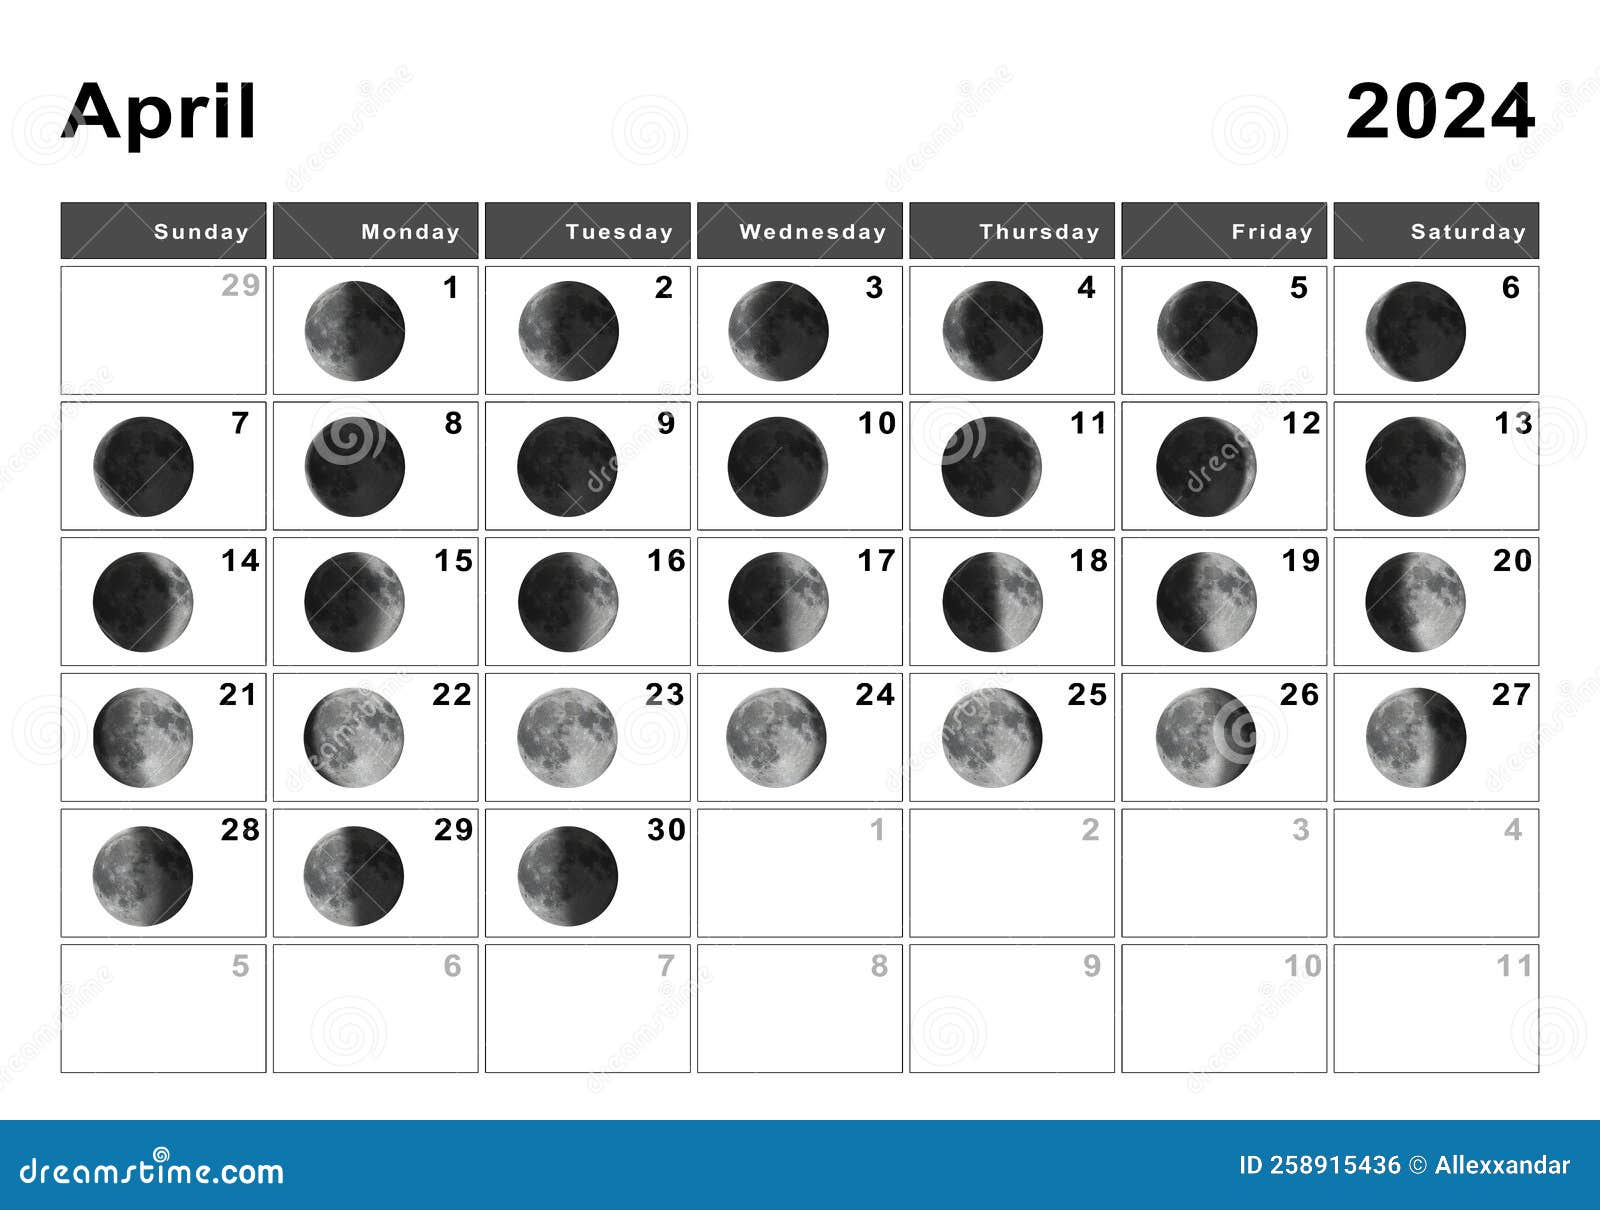 April 2024 Lunar Calendar, Moon Cycles Stock Illustration with regard to Moon Phase Calendar April 2024